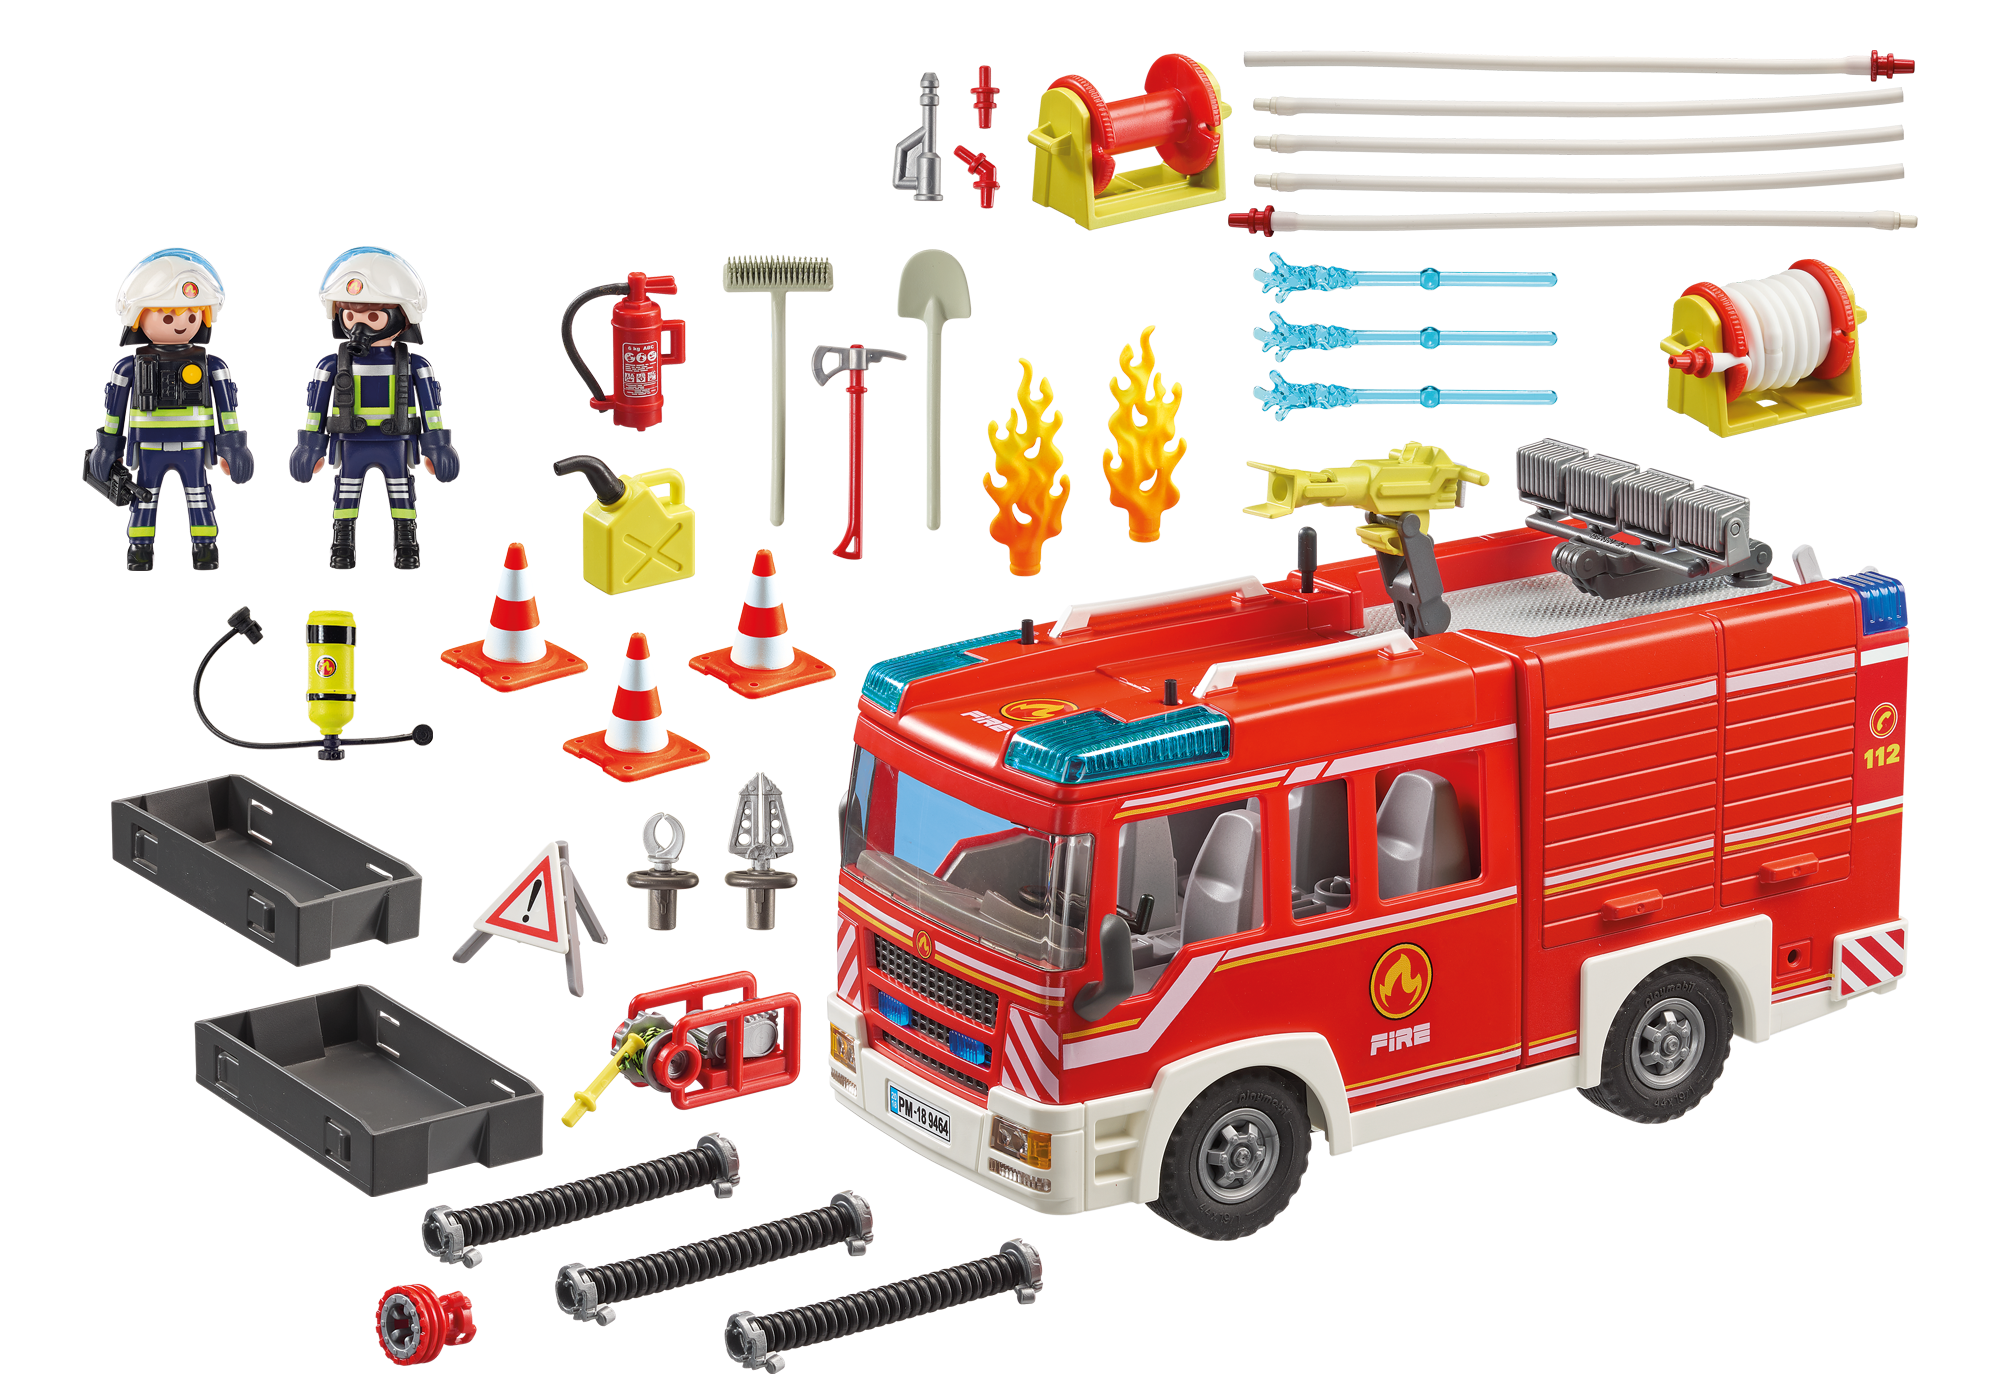 quad pompier playmobil